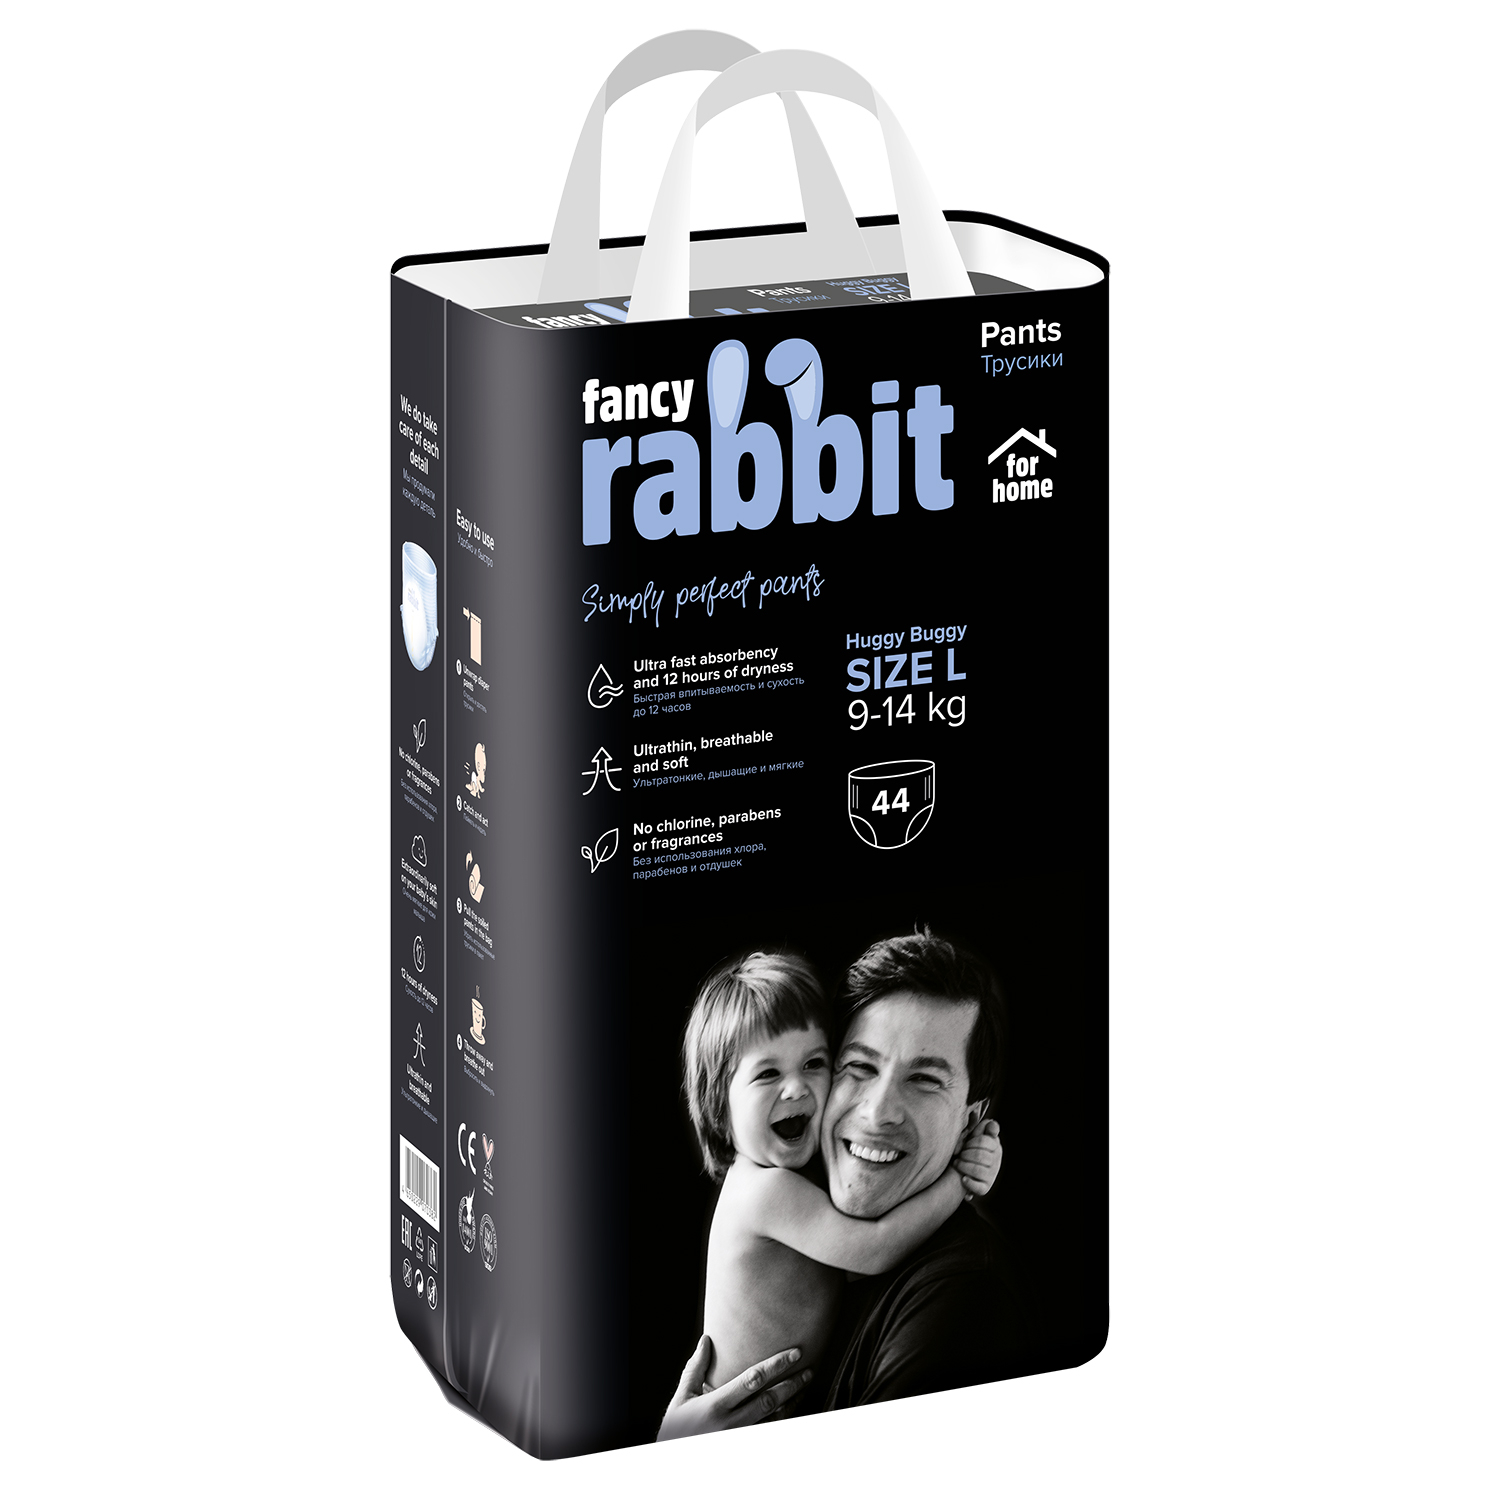 Трусики-подгузники Fancy Rabbit home, размер l, 9-14 кг, 44 шт подгузники fancy rabbit for home xs 0 5 кг 44 шт